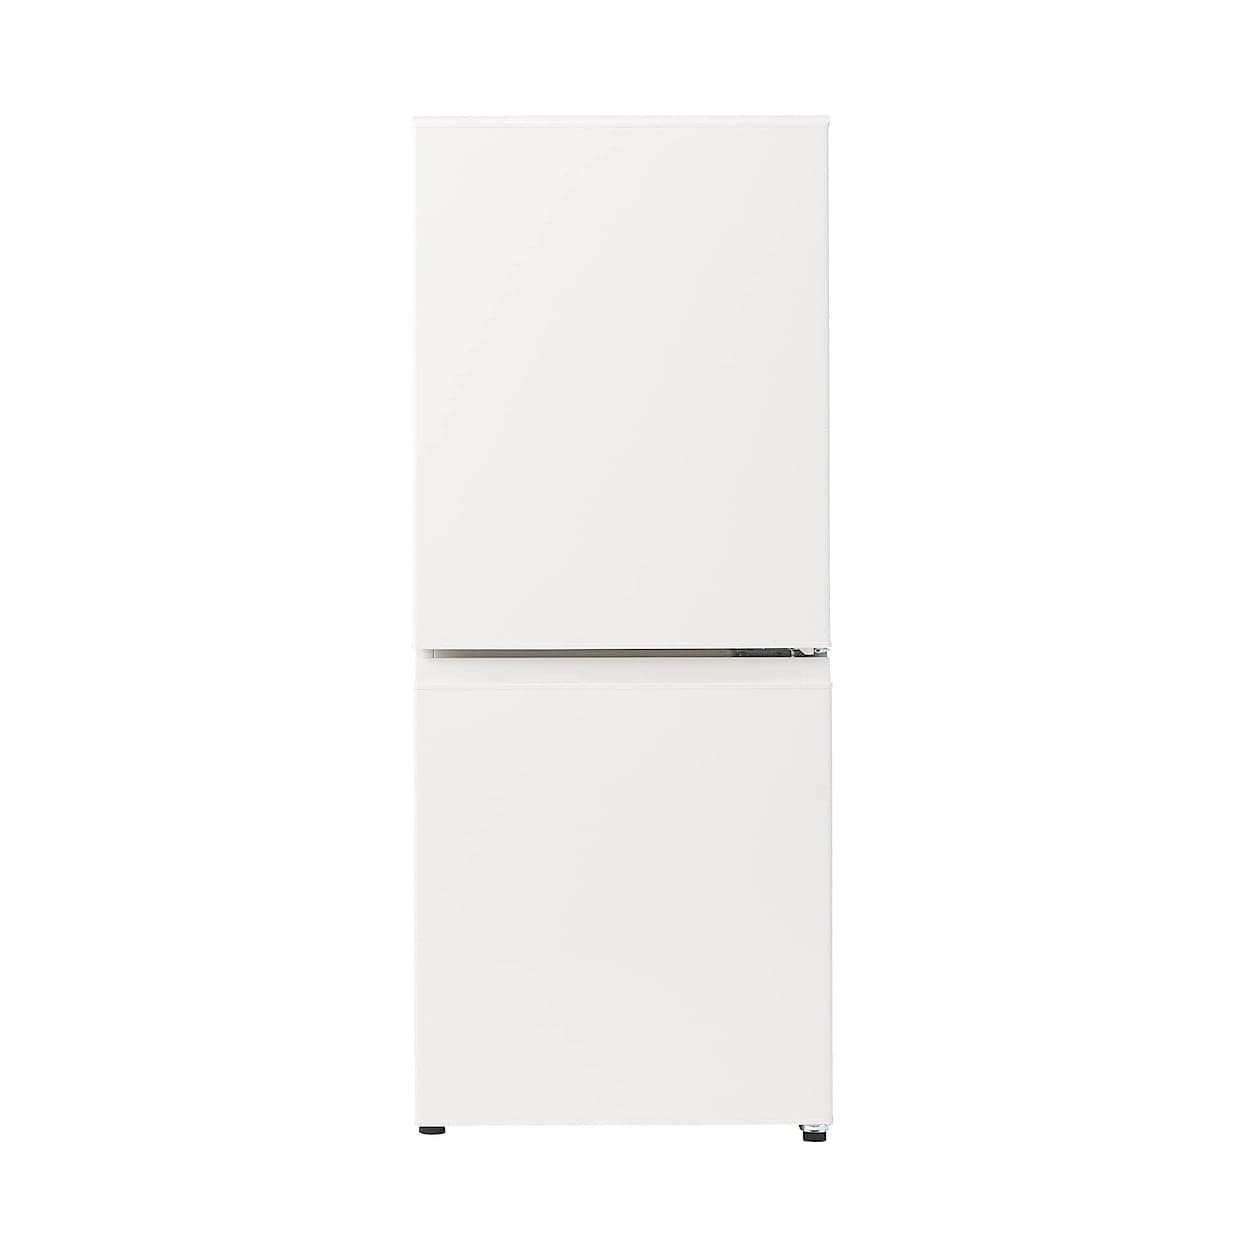 MUJI 無印良品 冷蔵庫(126L) MJ-R13B - 冷蔵庫